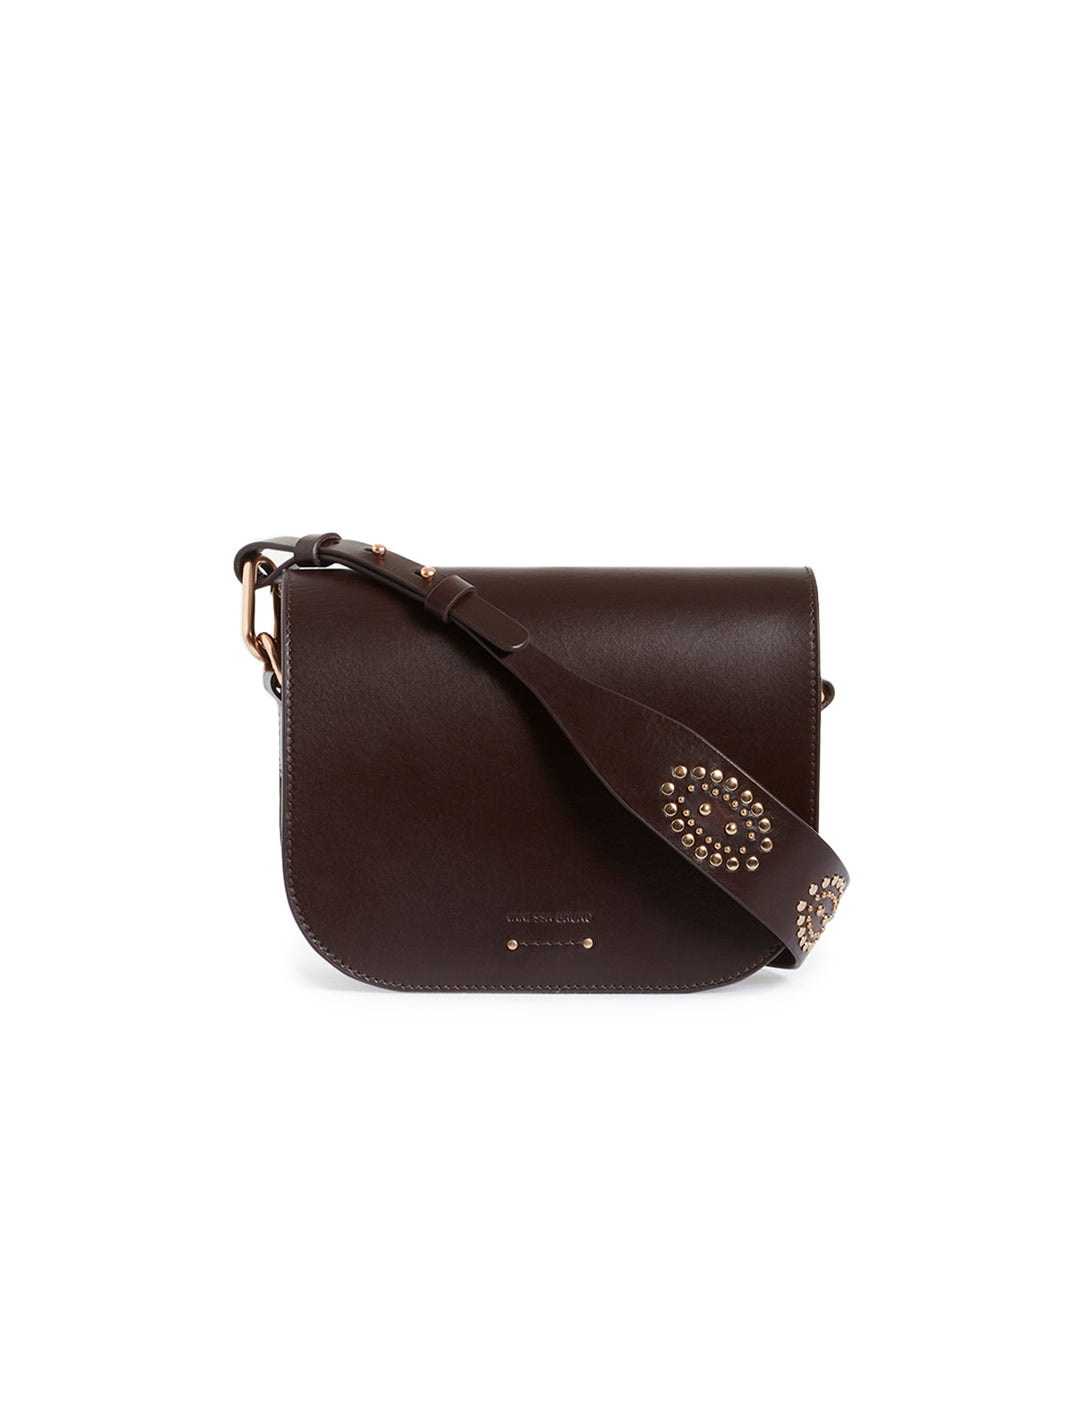 crossbody gm handbag in noir – Twigs